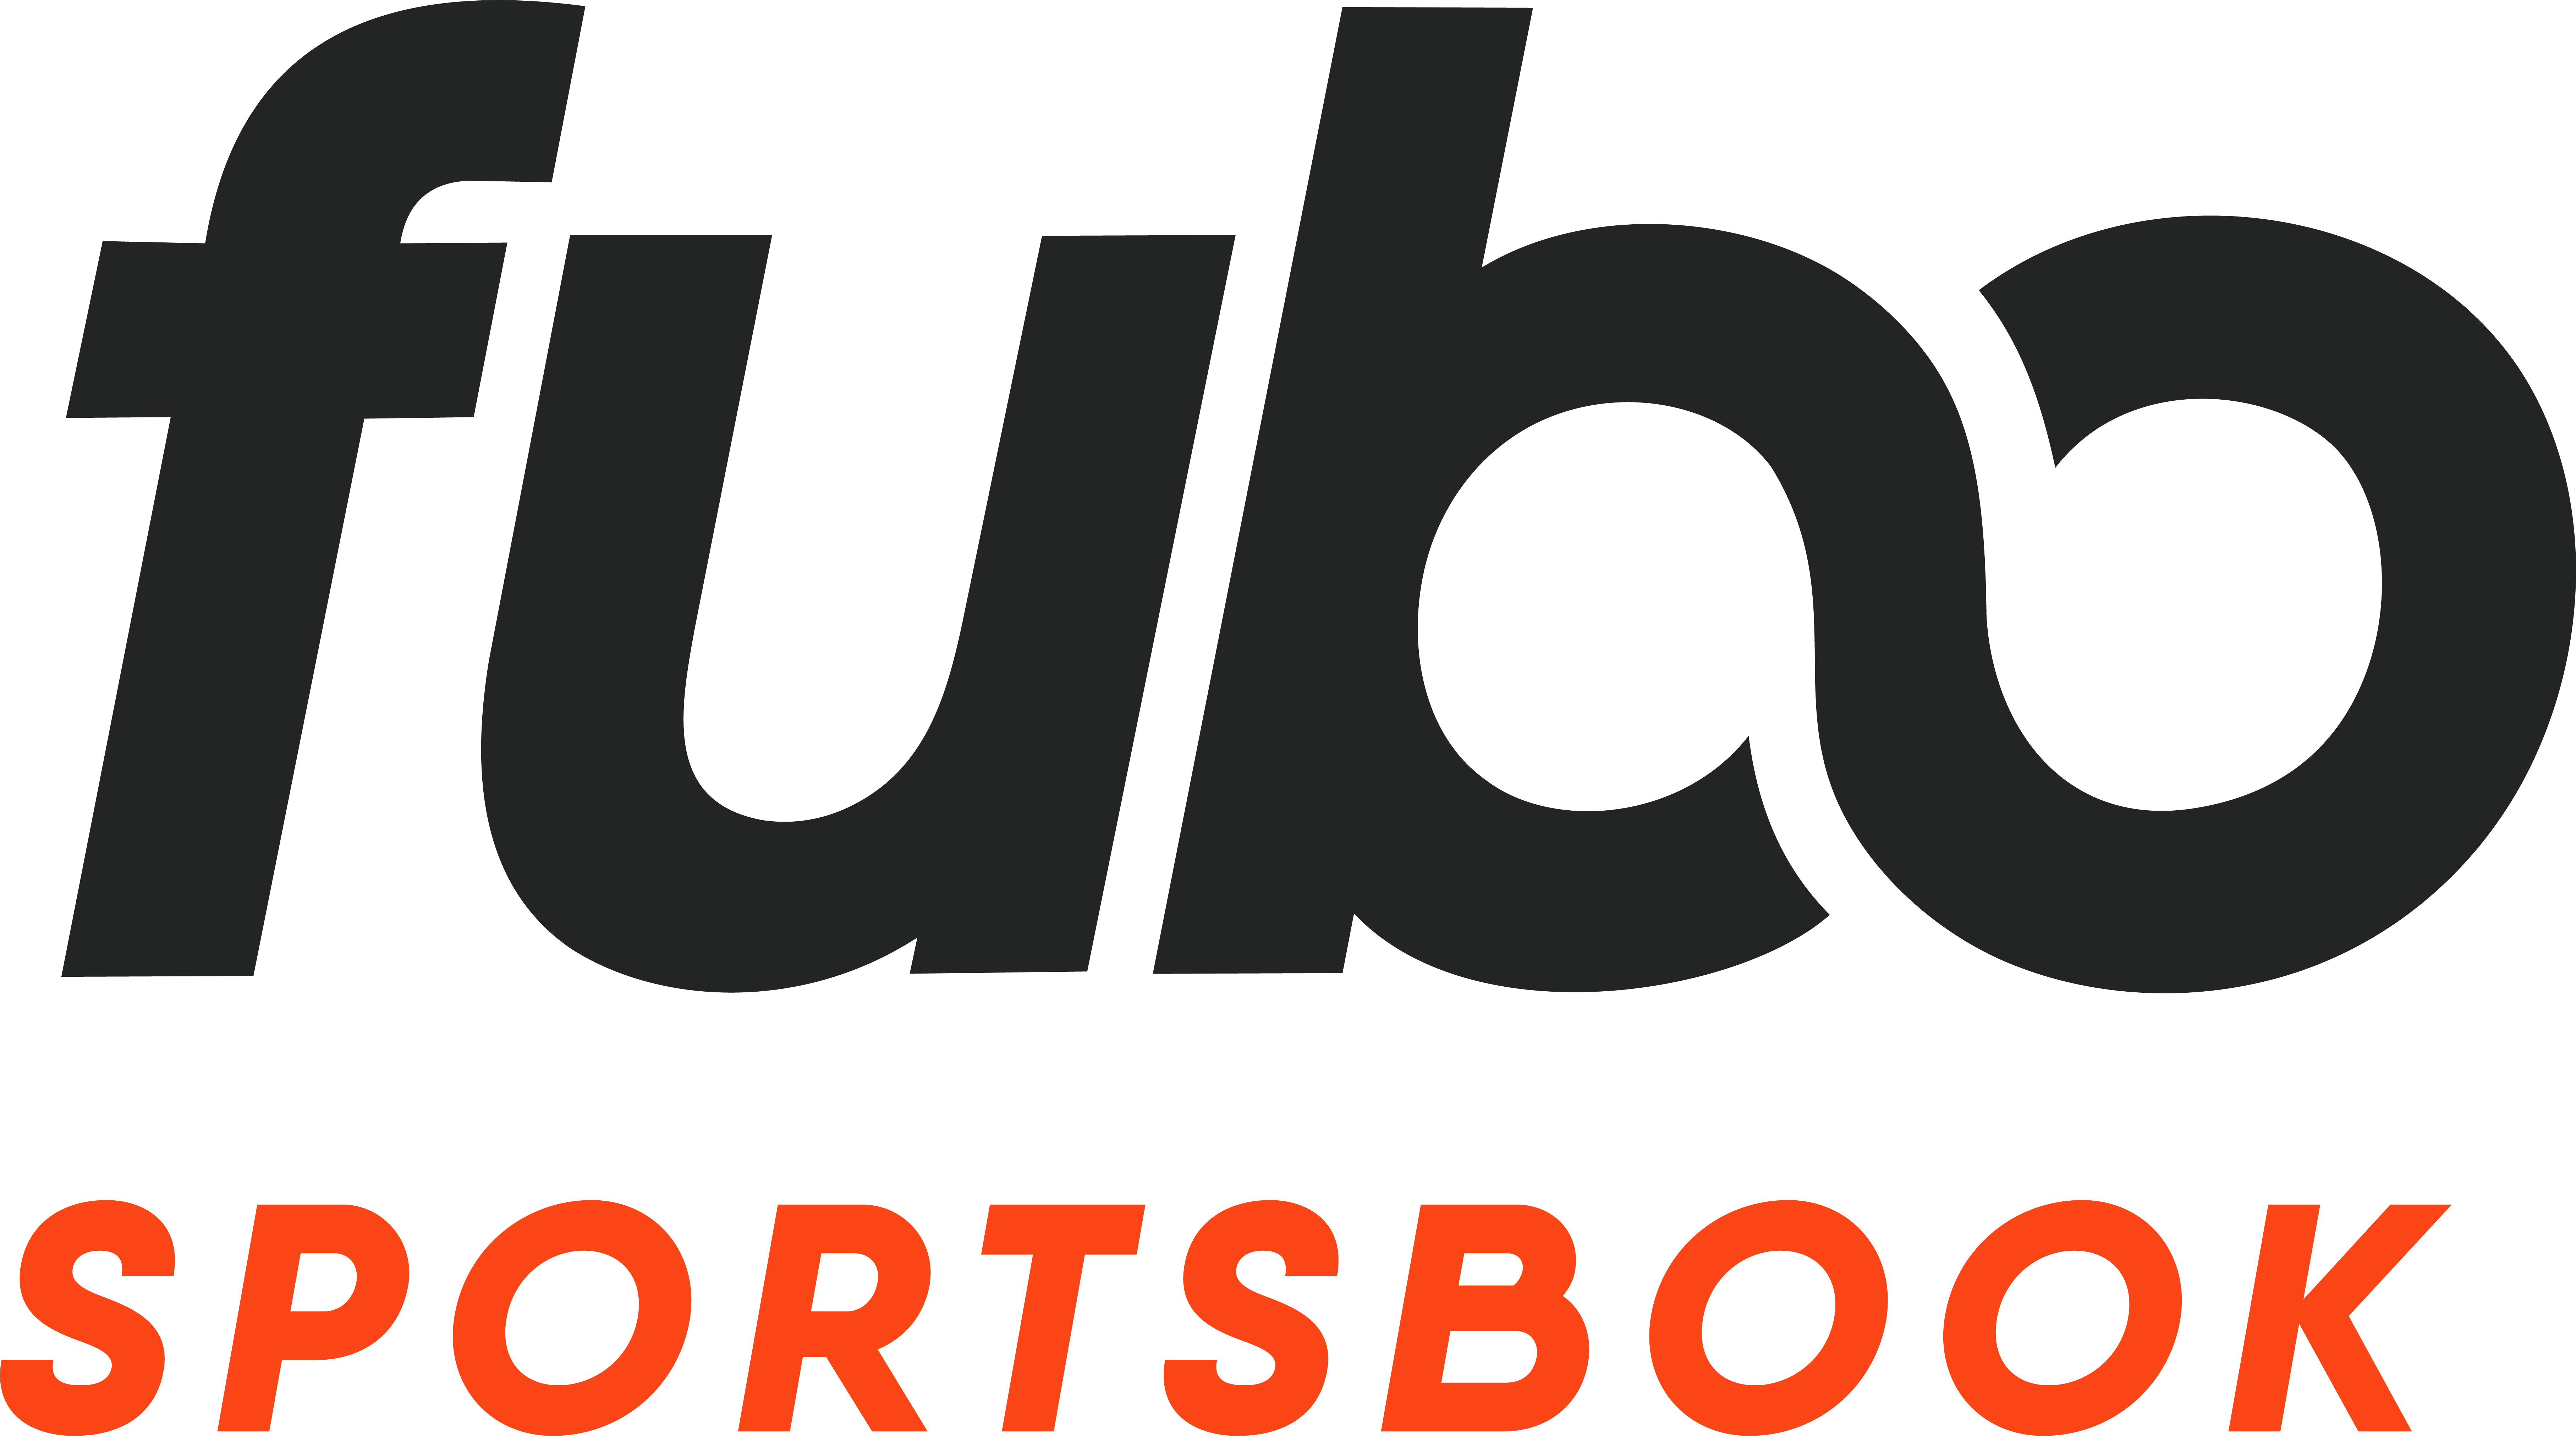 Fubo sportsbook logo